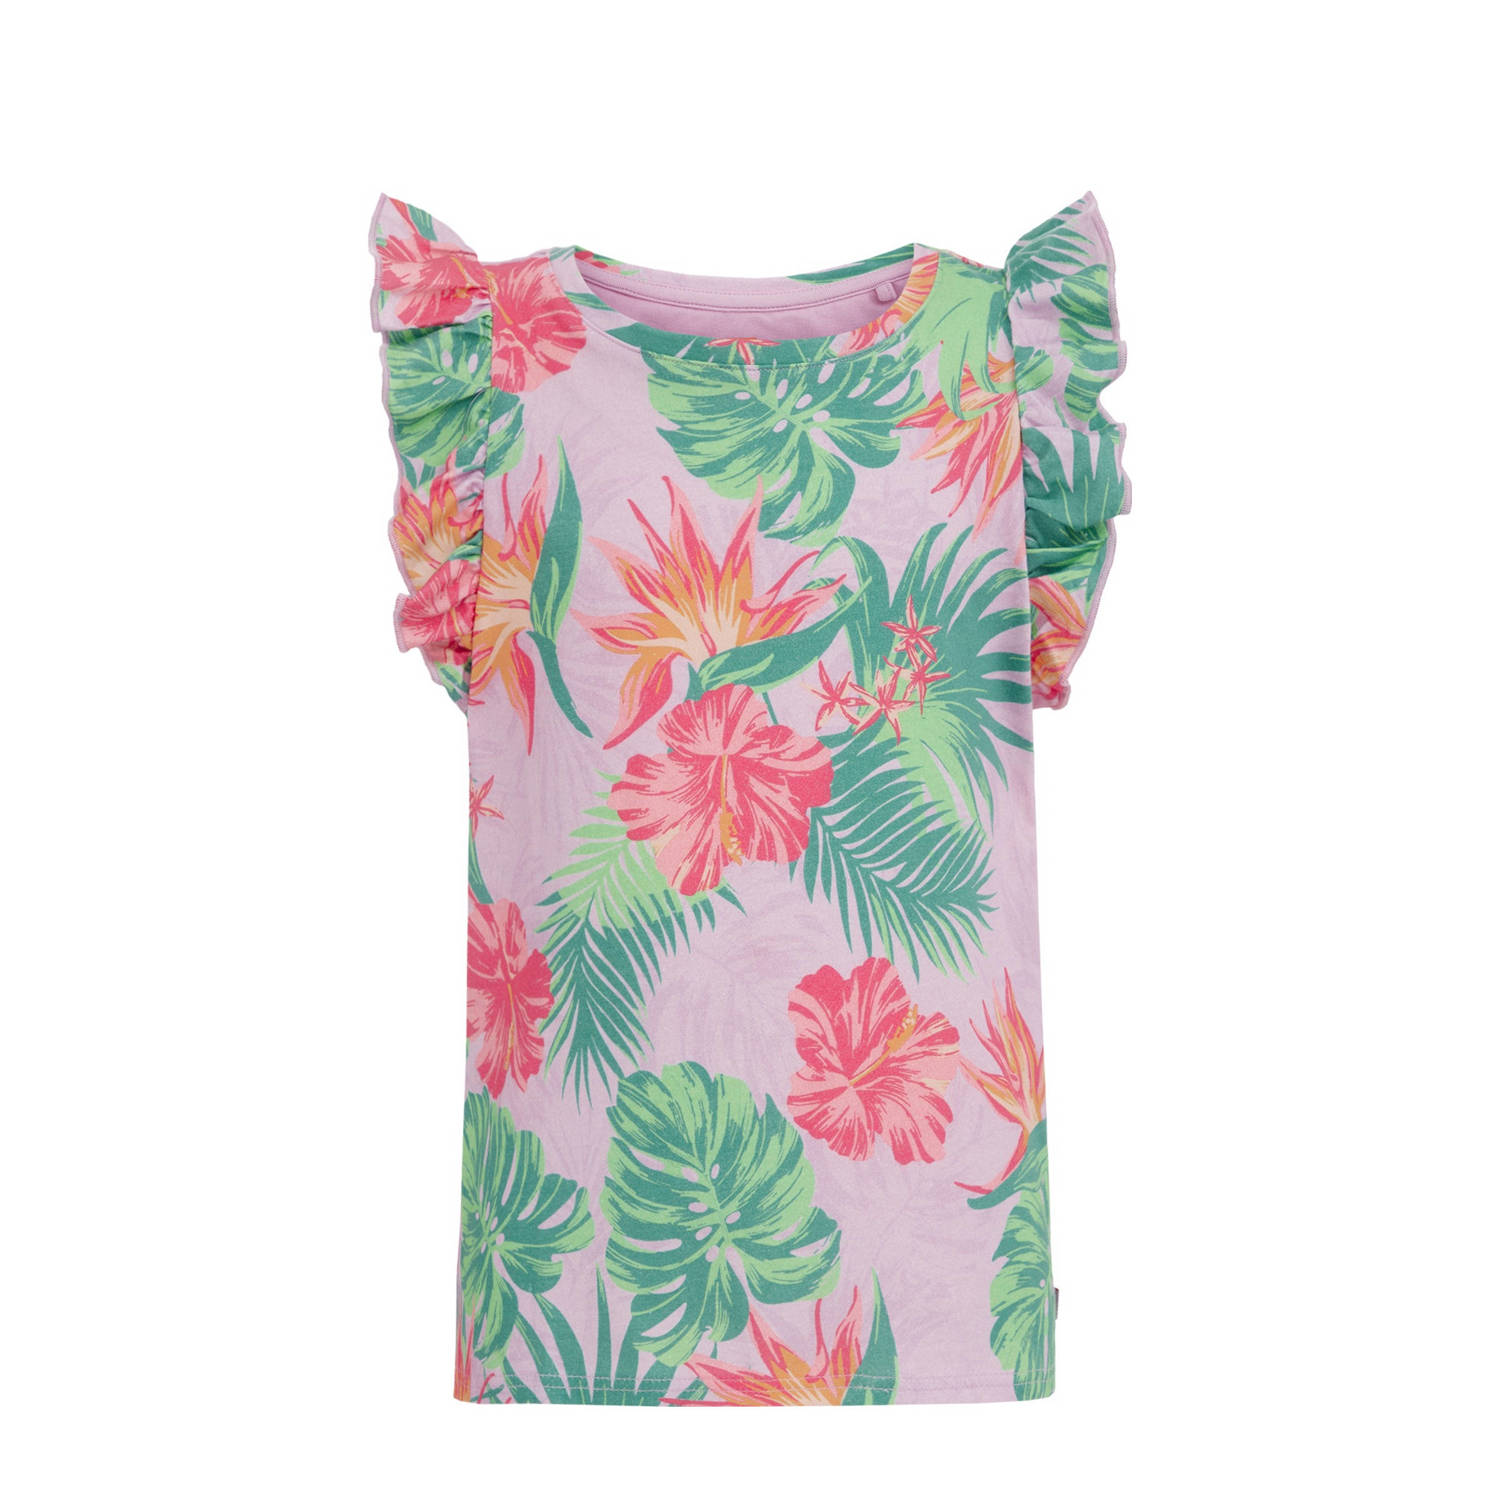 WE Fashion top met bloemdessin lila groen roze T-shirt Multi Meisjes Katoen Ronde hals 110 116